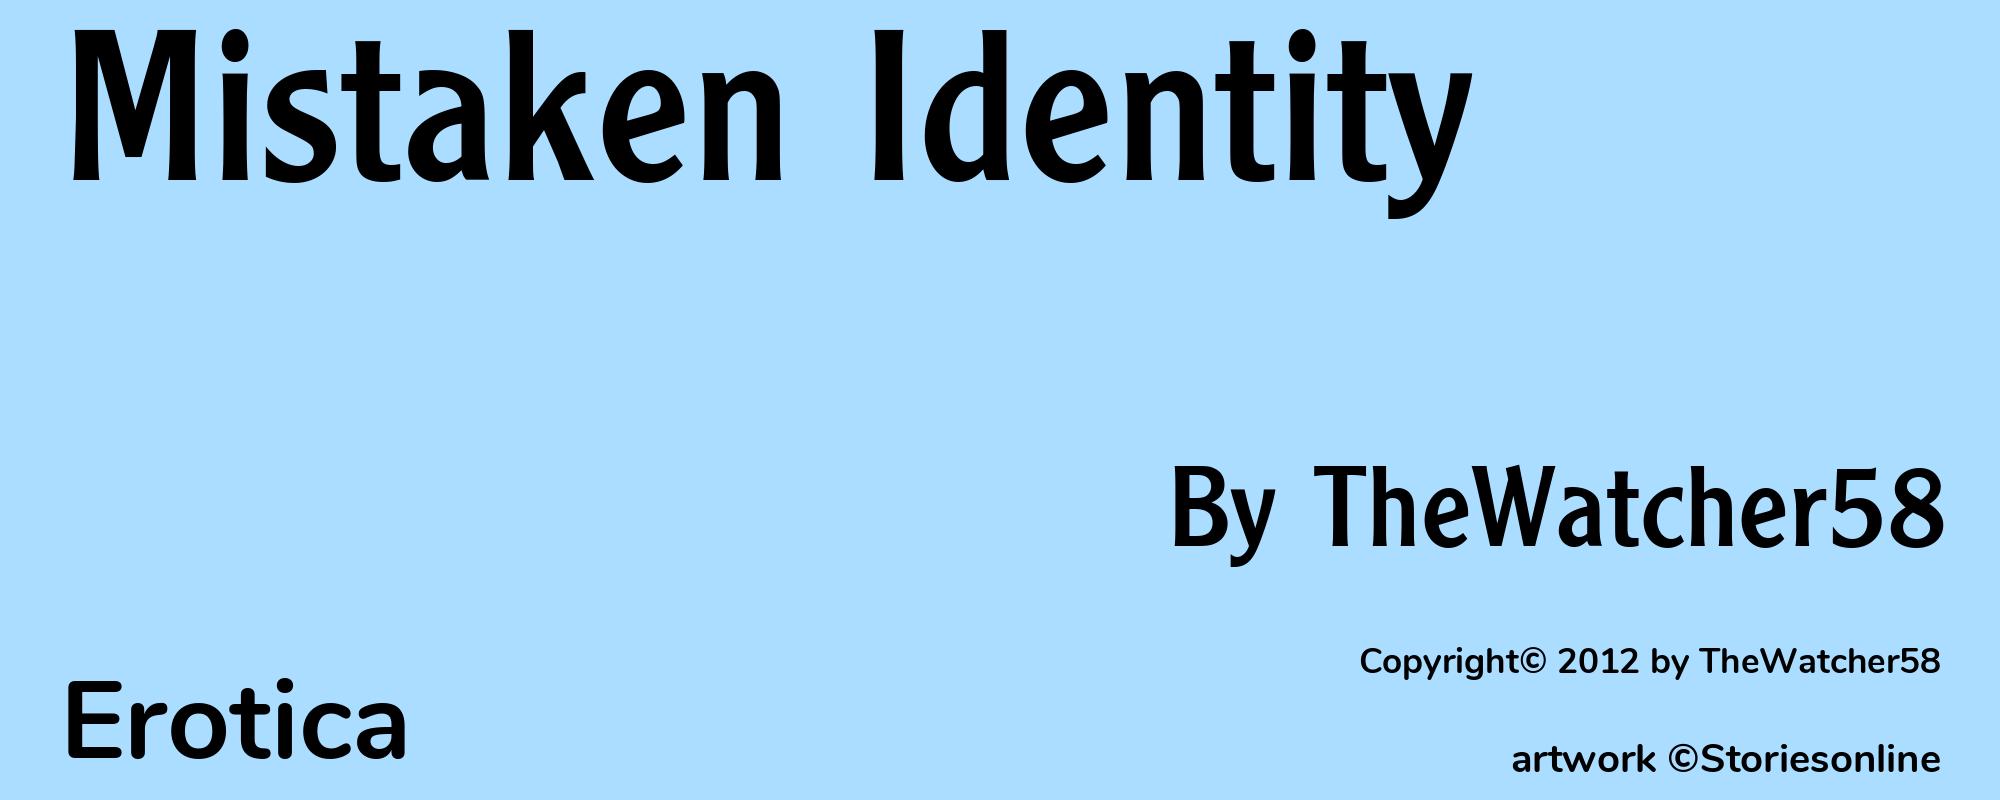 Mistaken Identity - Cover